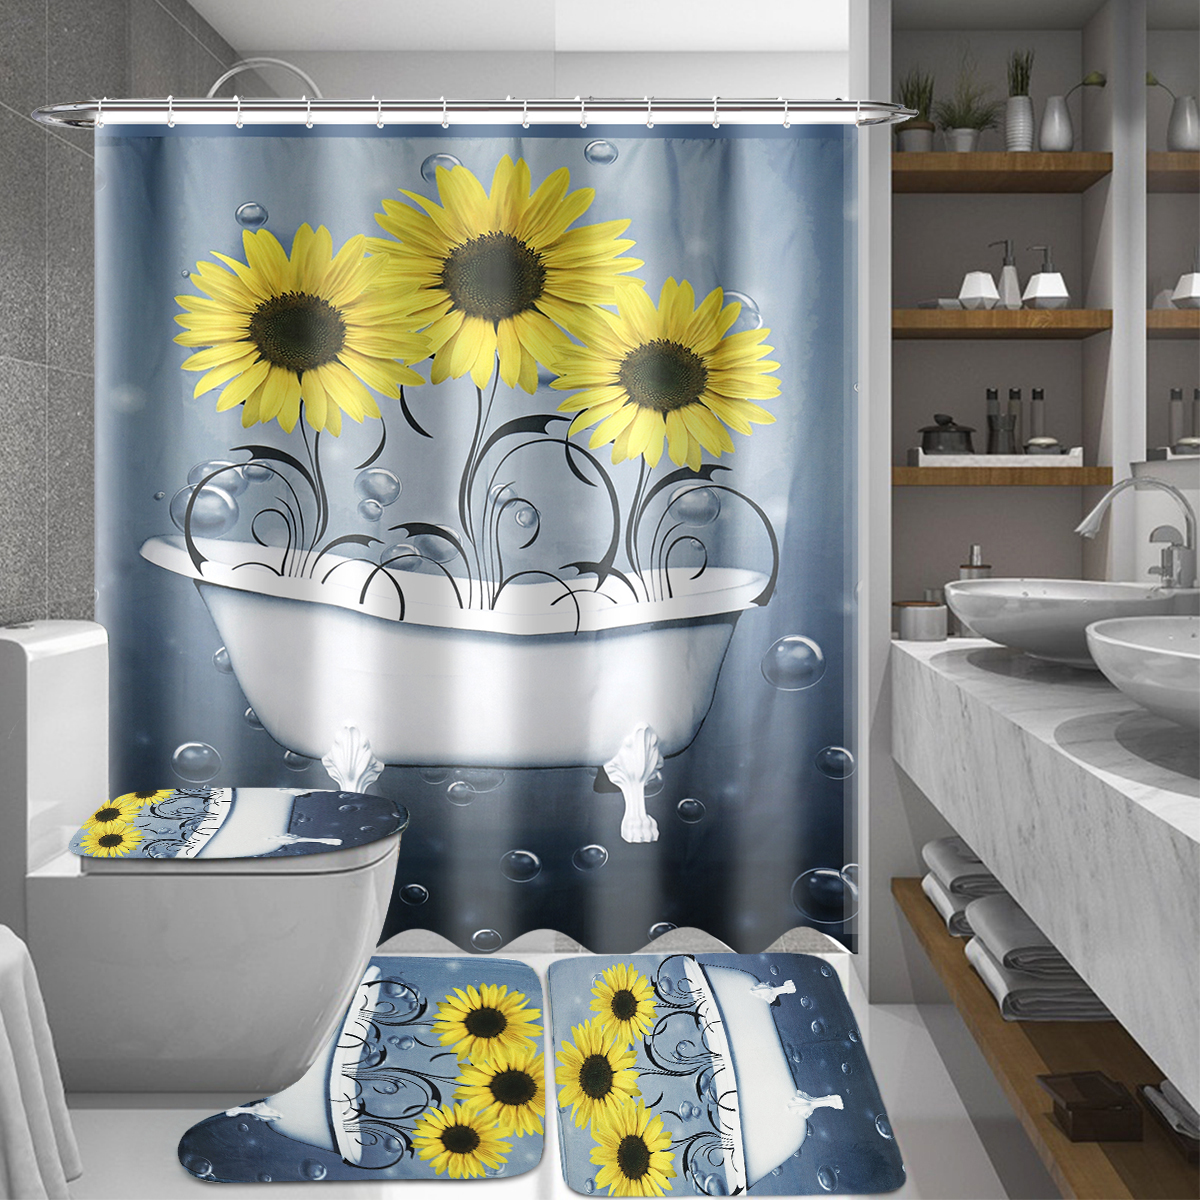 Sunflower-Shower-Curtain-Non-Slip-with-Free-Hooks-Waterproof-Fabric-Bathroom-Set-1821914-1